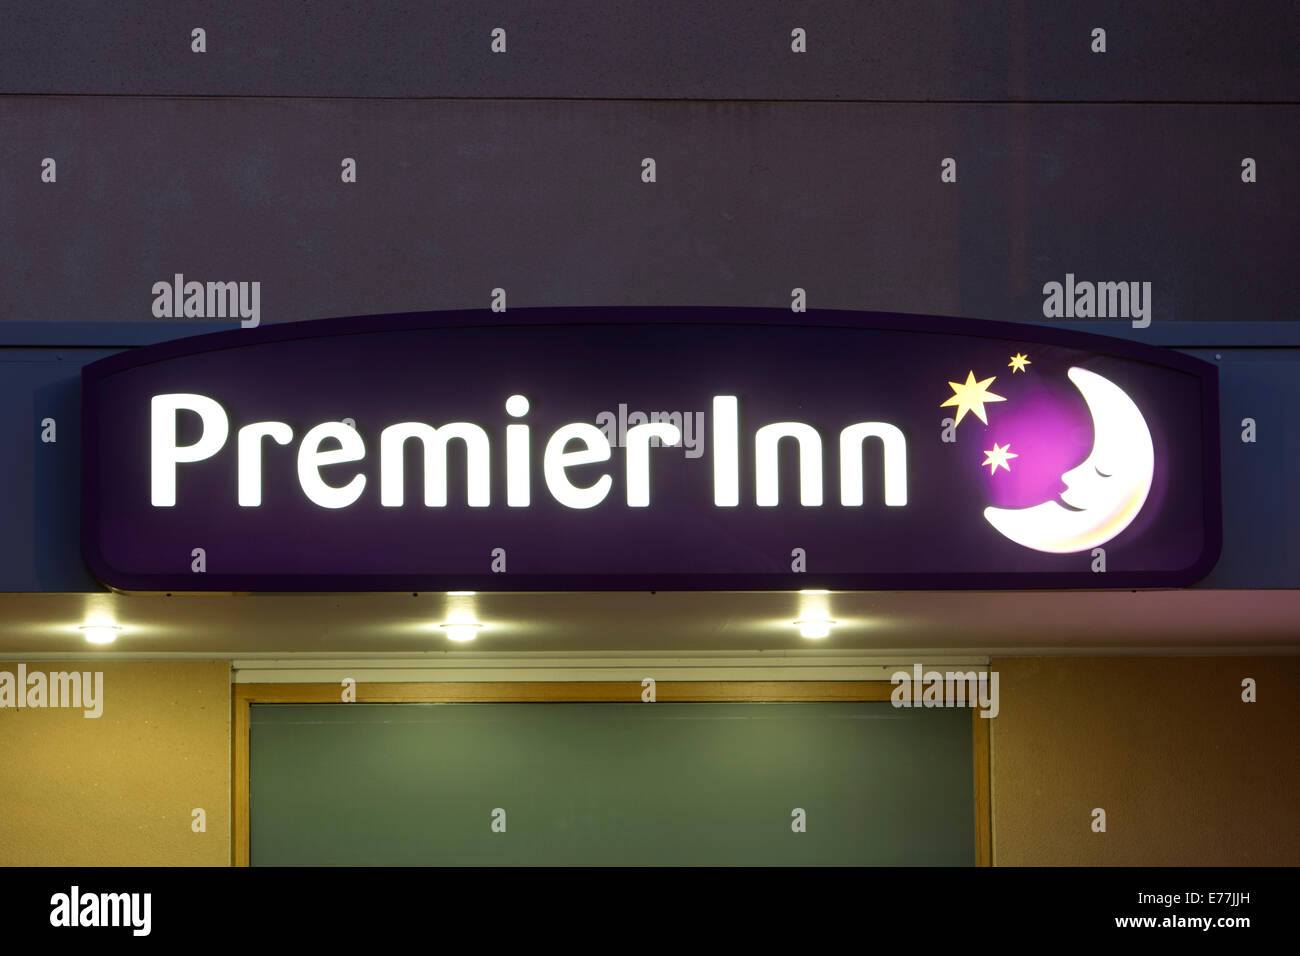 Premier Inn sign at night, Stratford-upon-Avon, UK Stock Photo